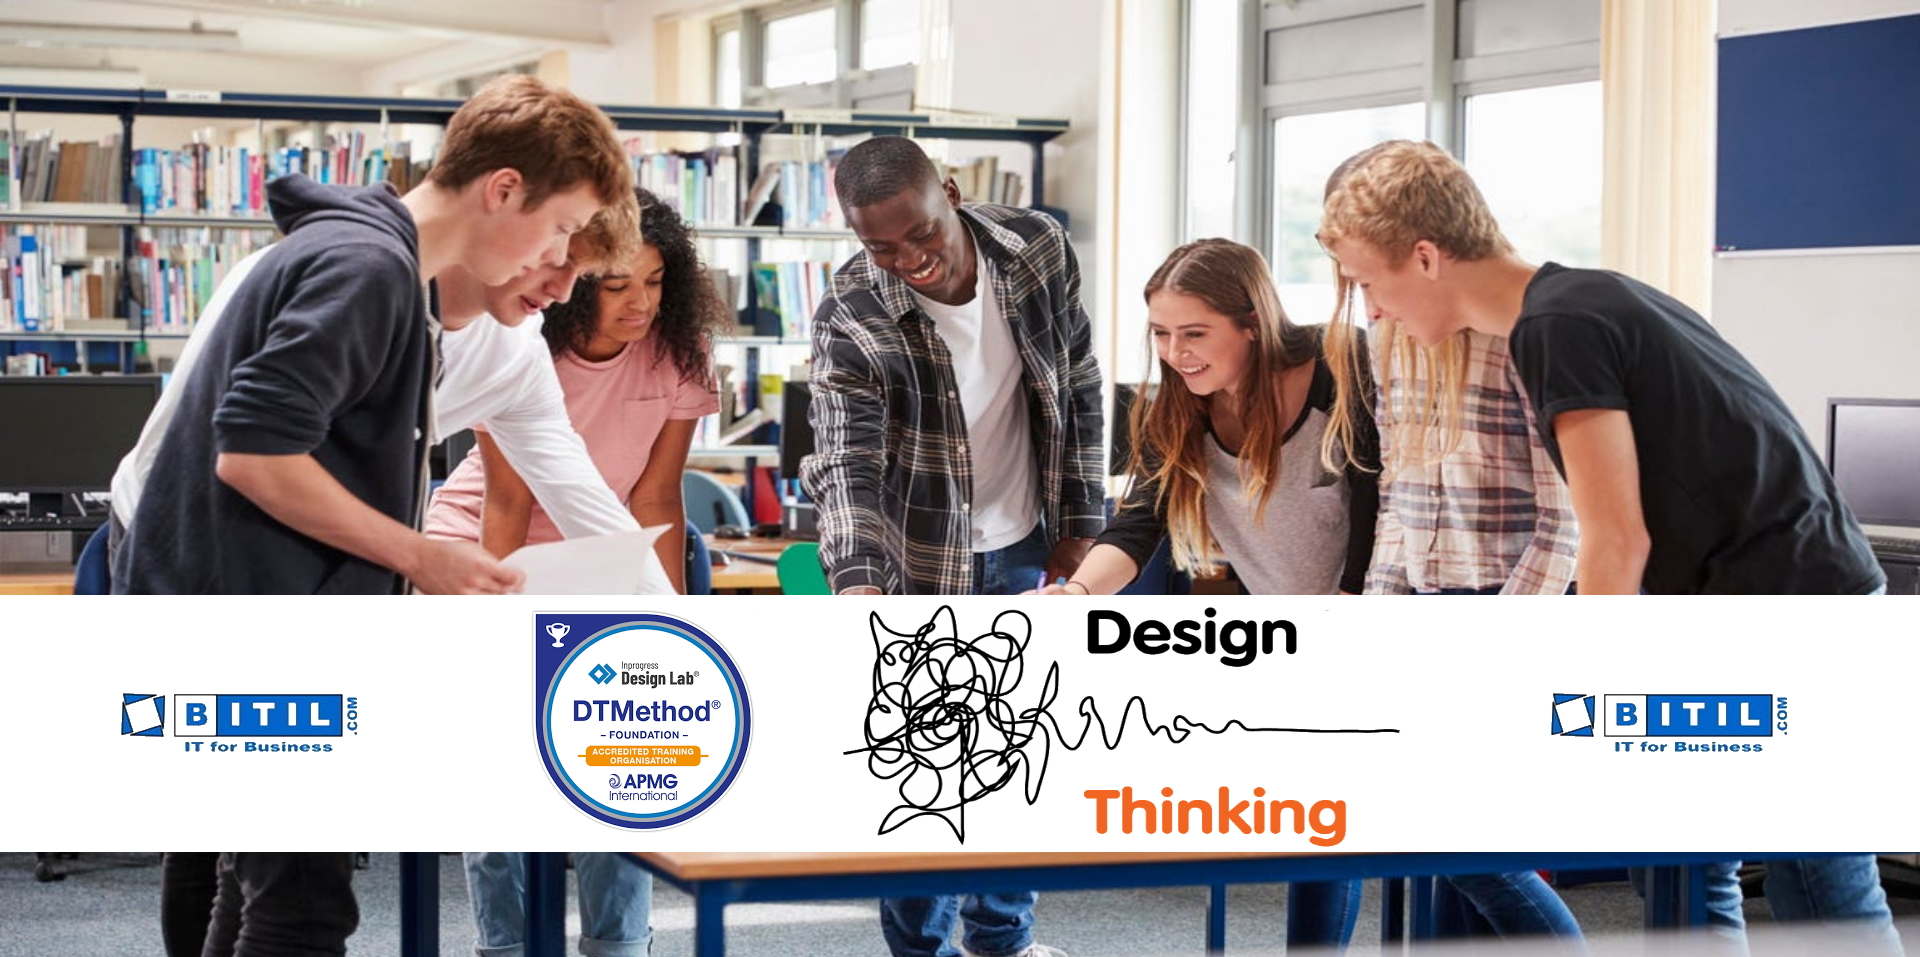 Design Thinking based on DTMethod